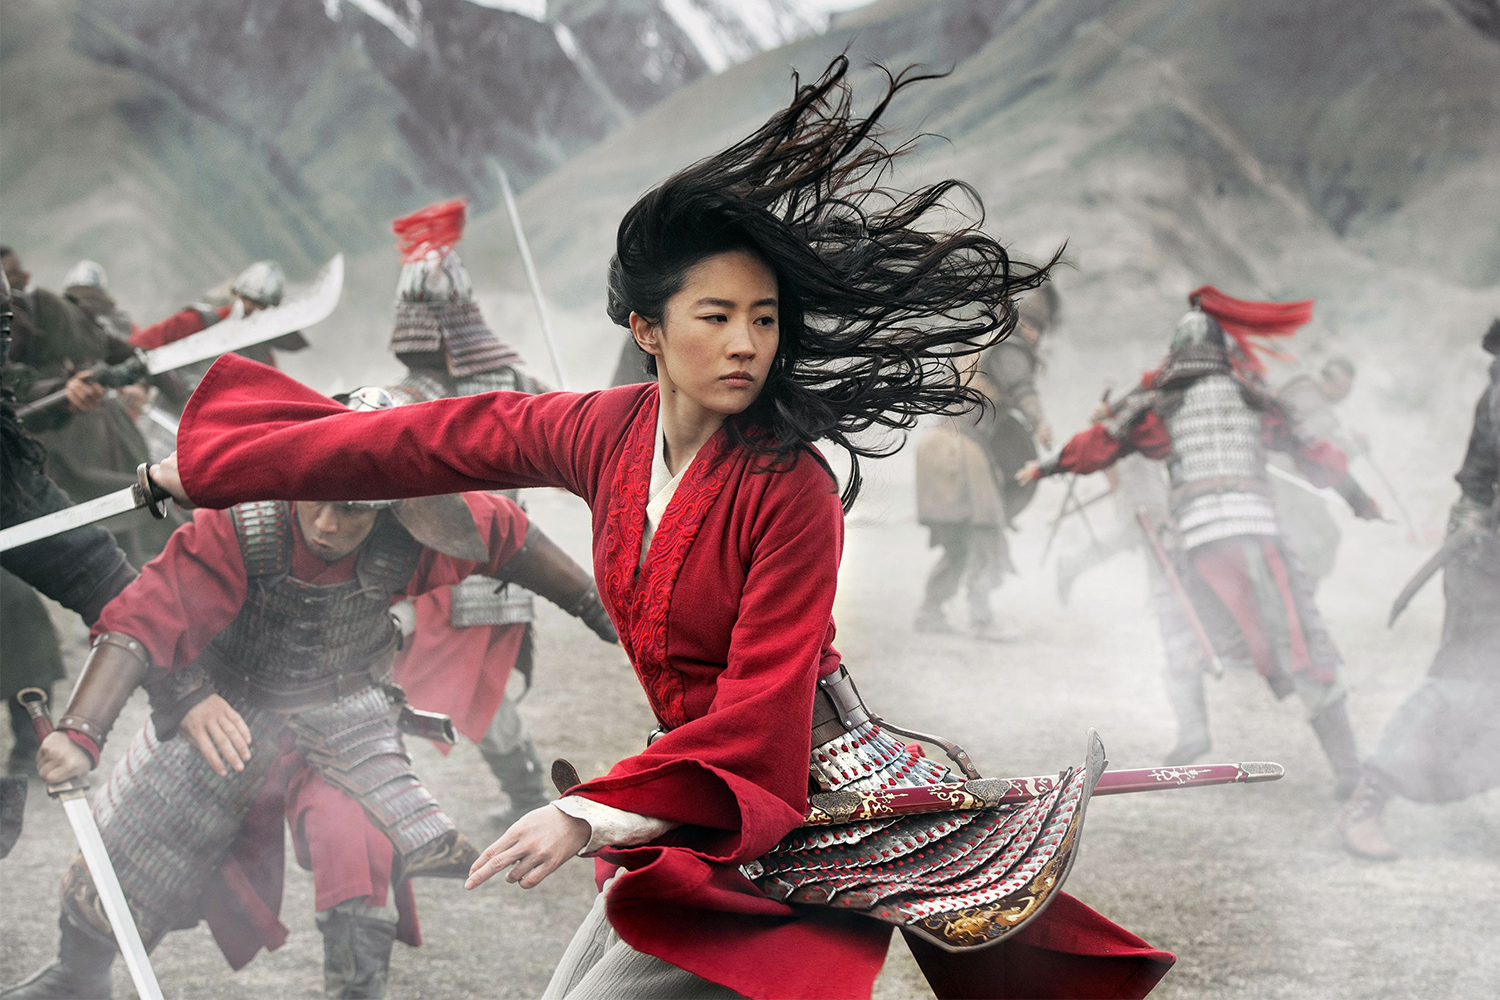 Liu Yifei as Mulan in Disney's remake of the animated movie